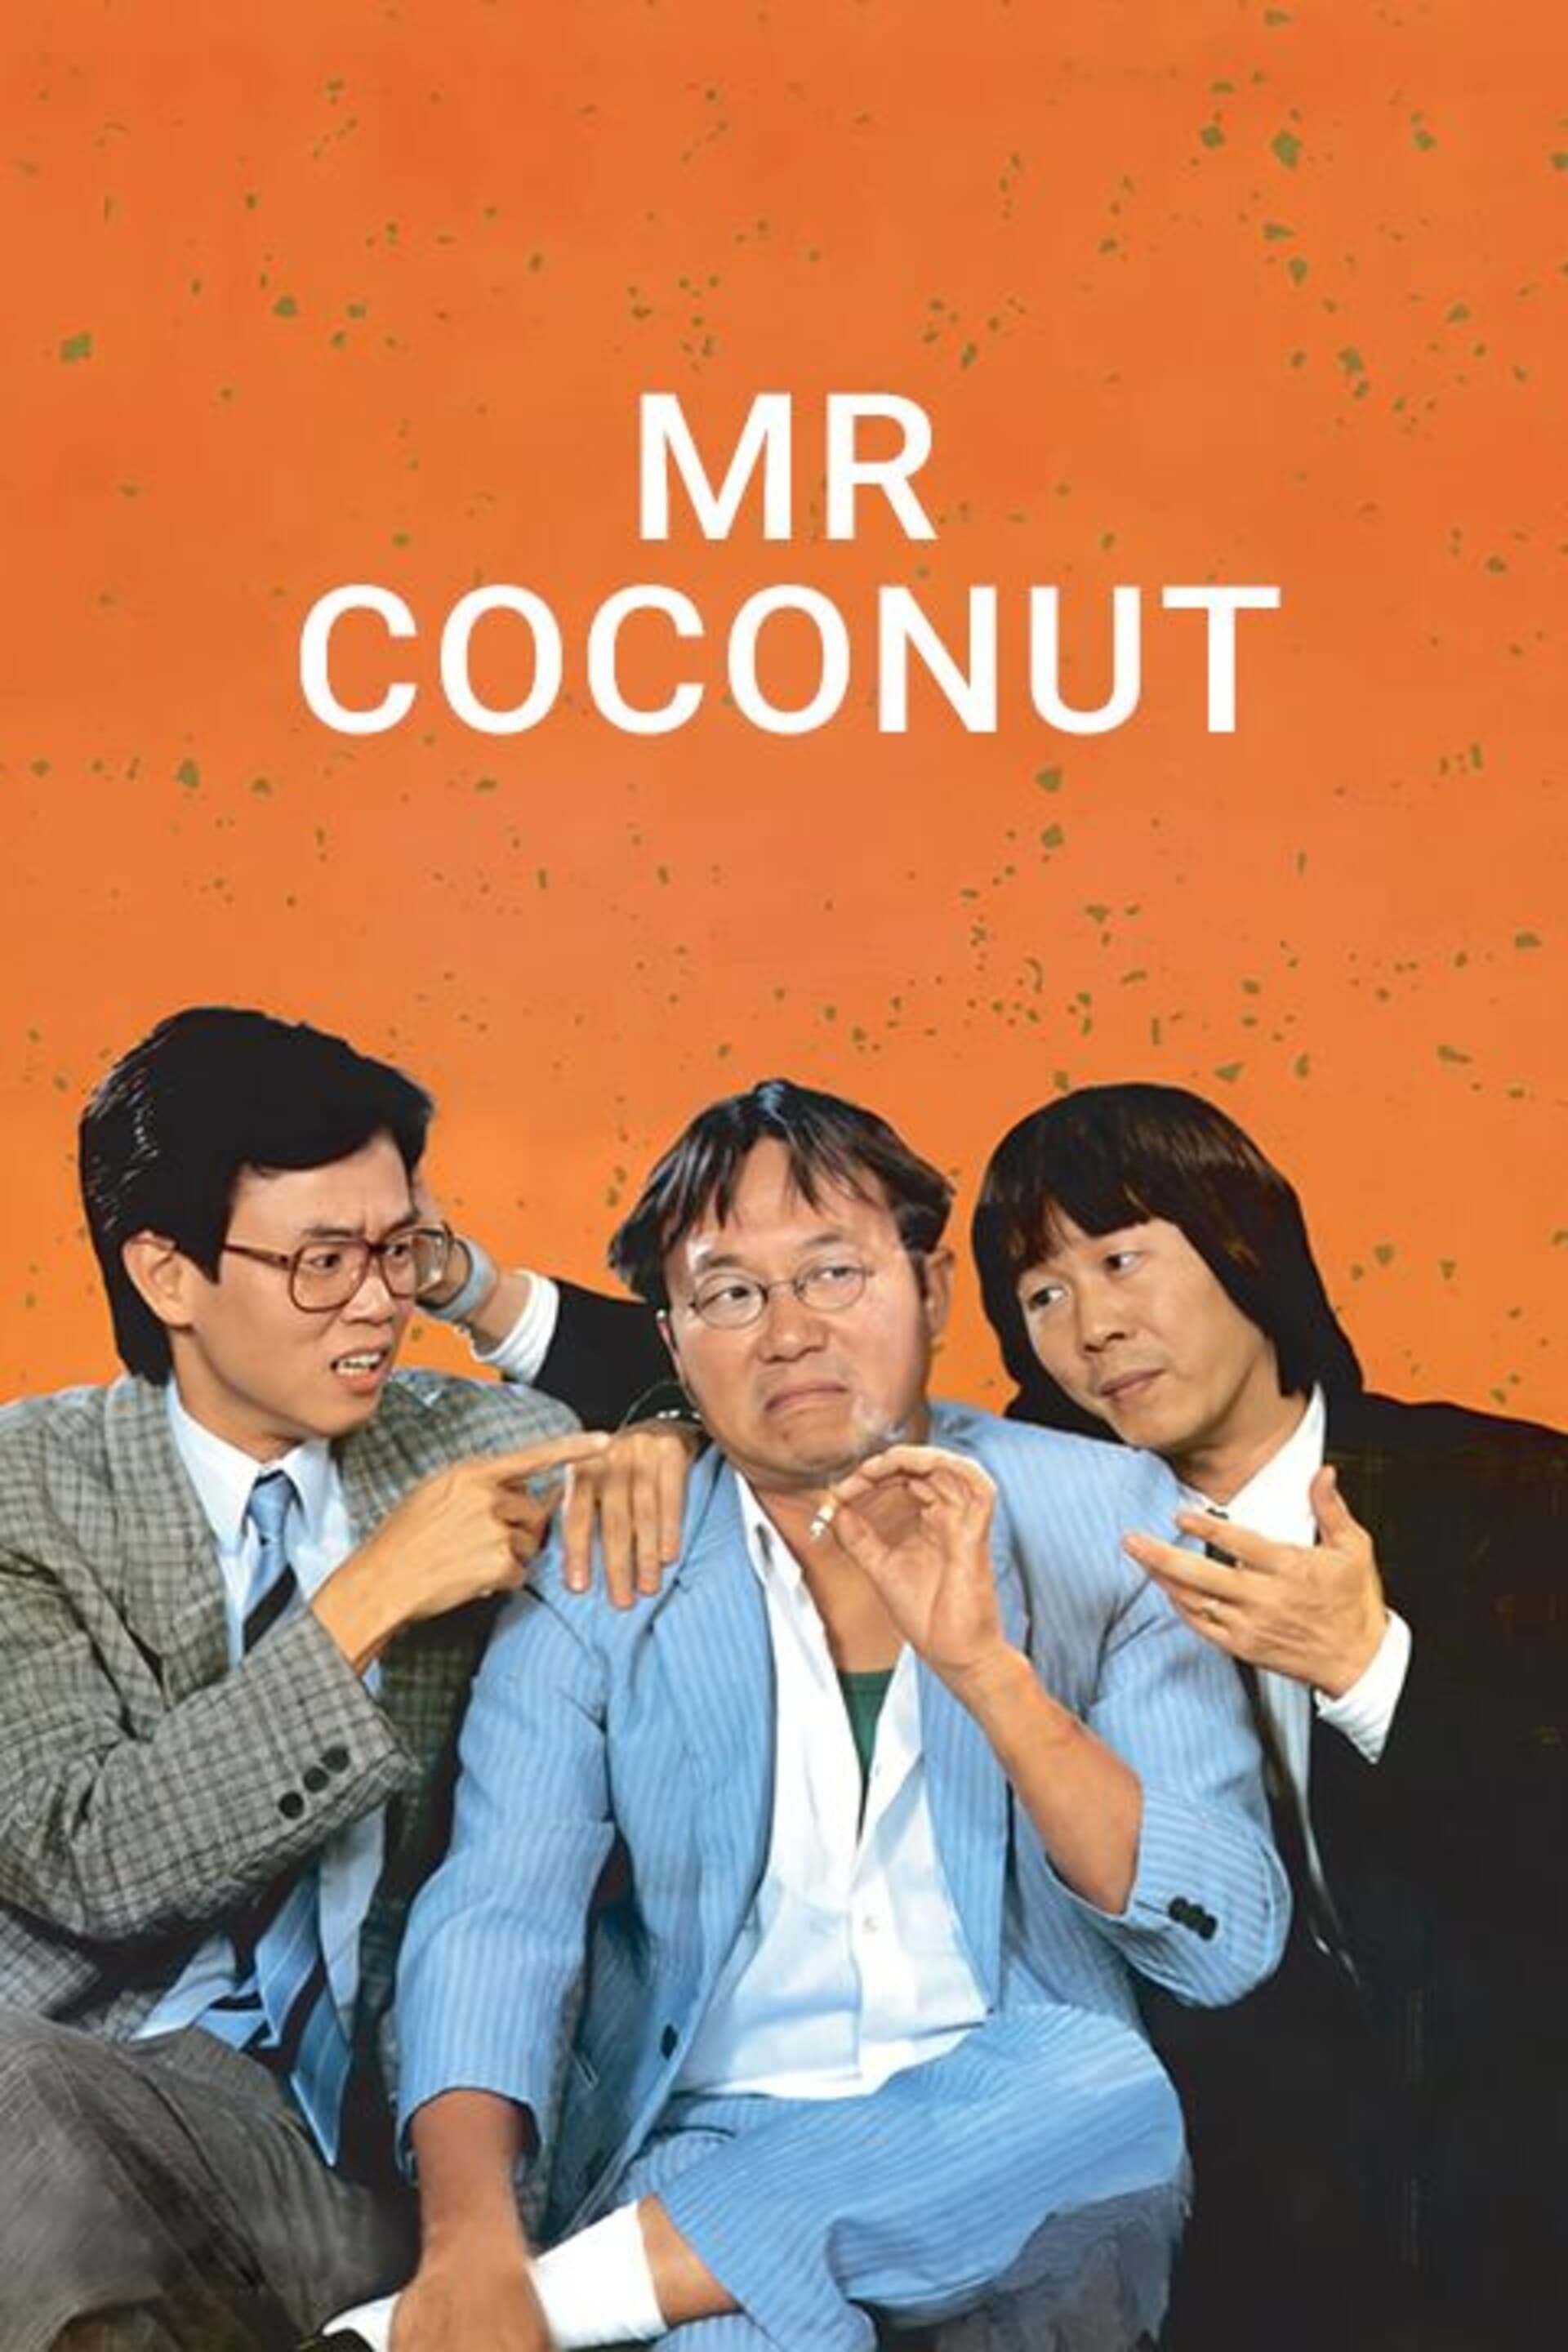 Mr. Coconut